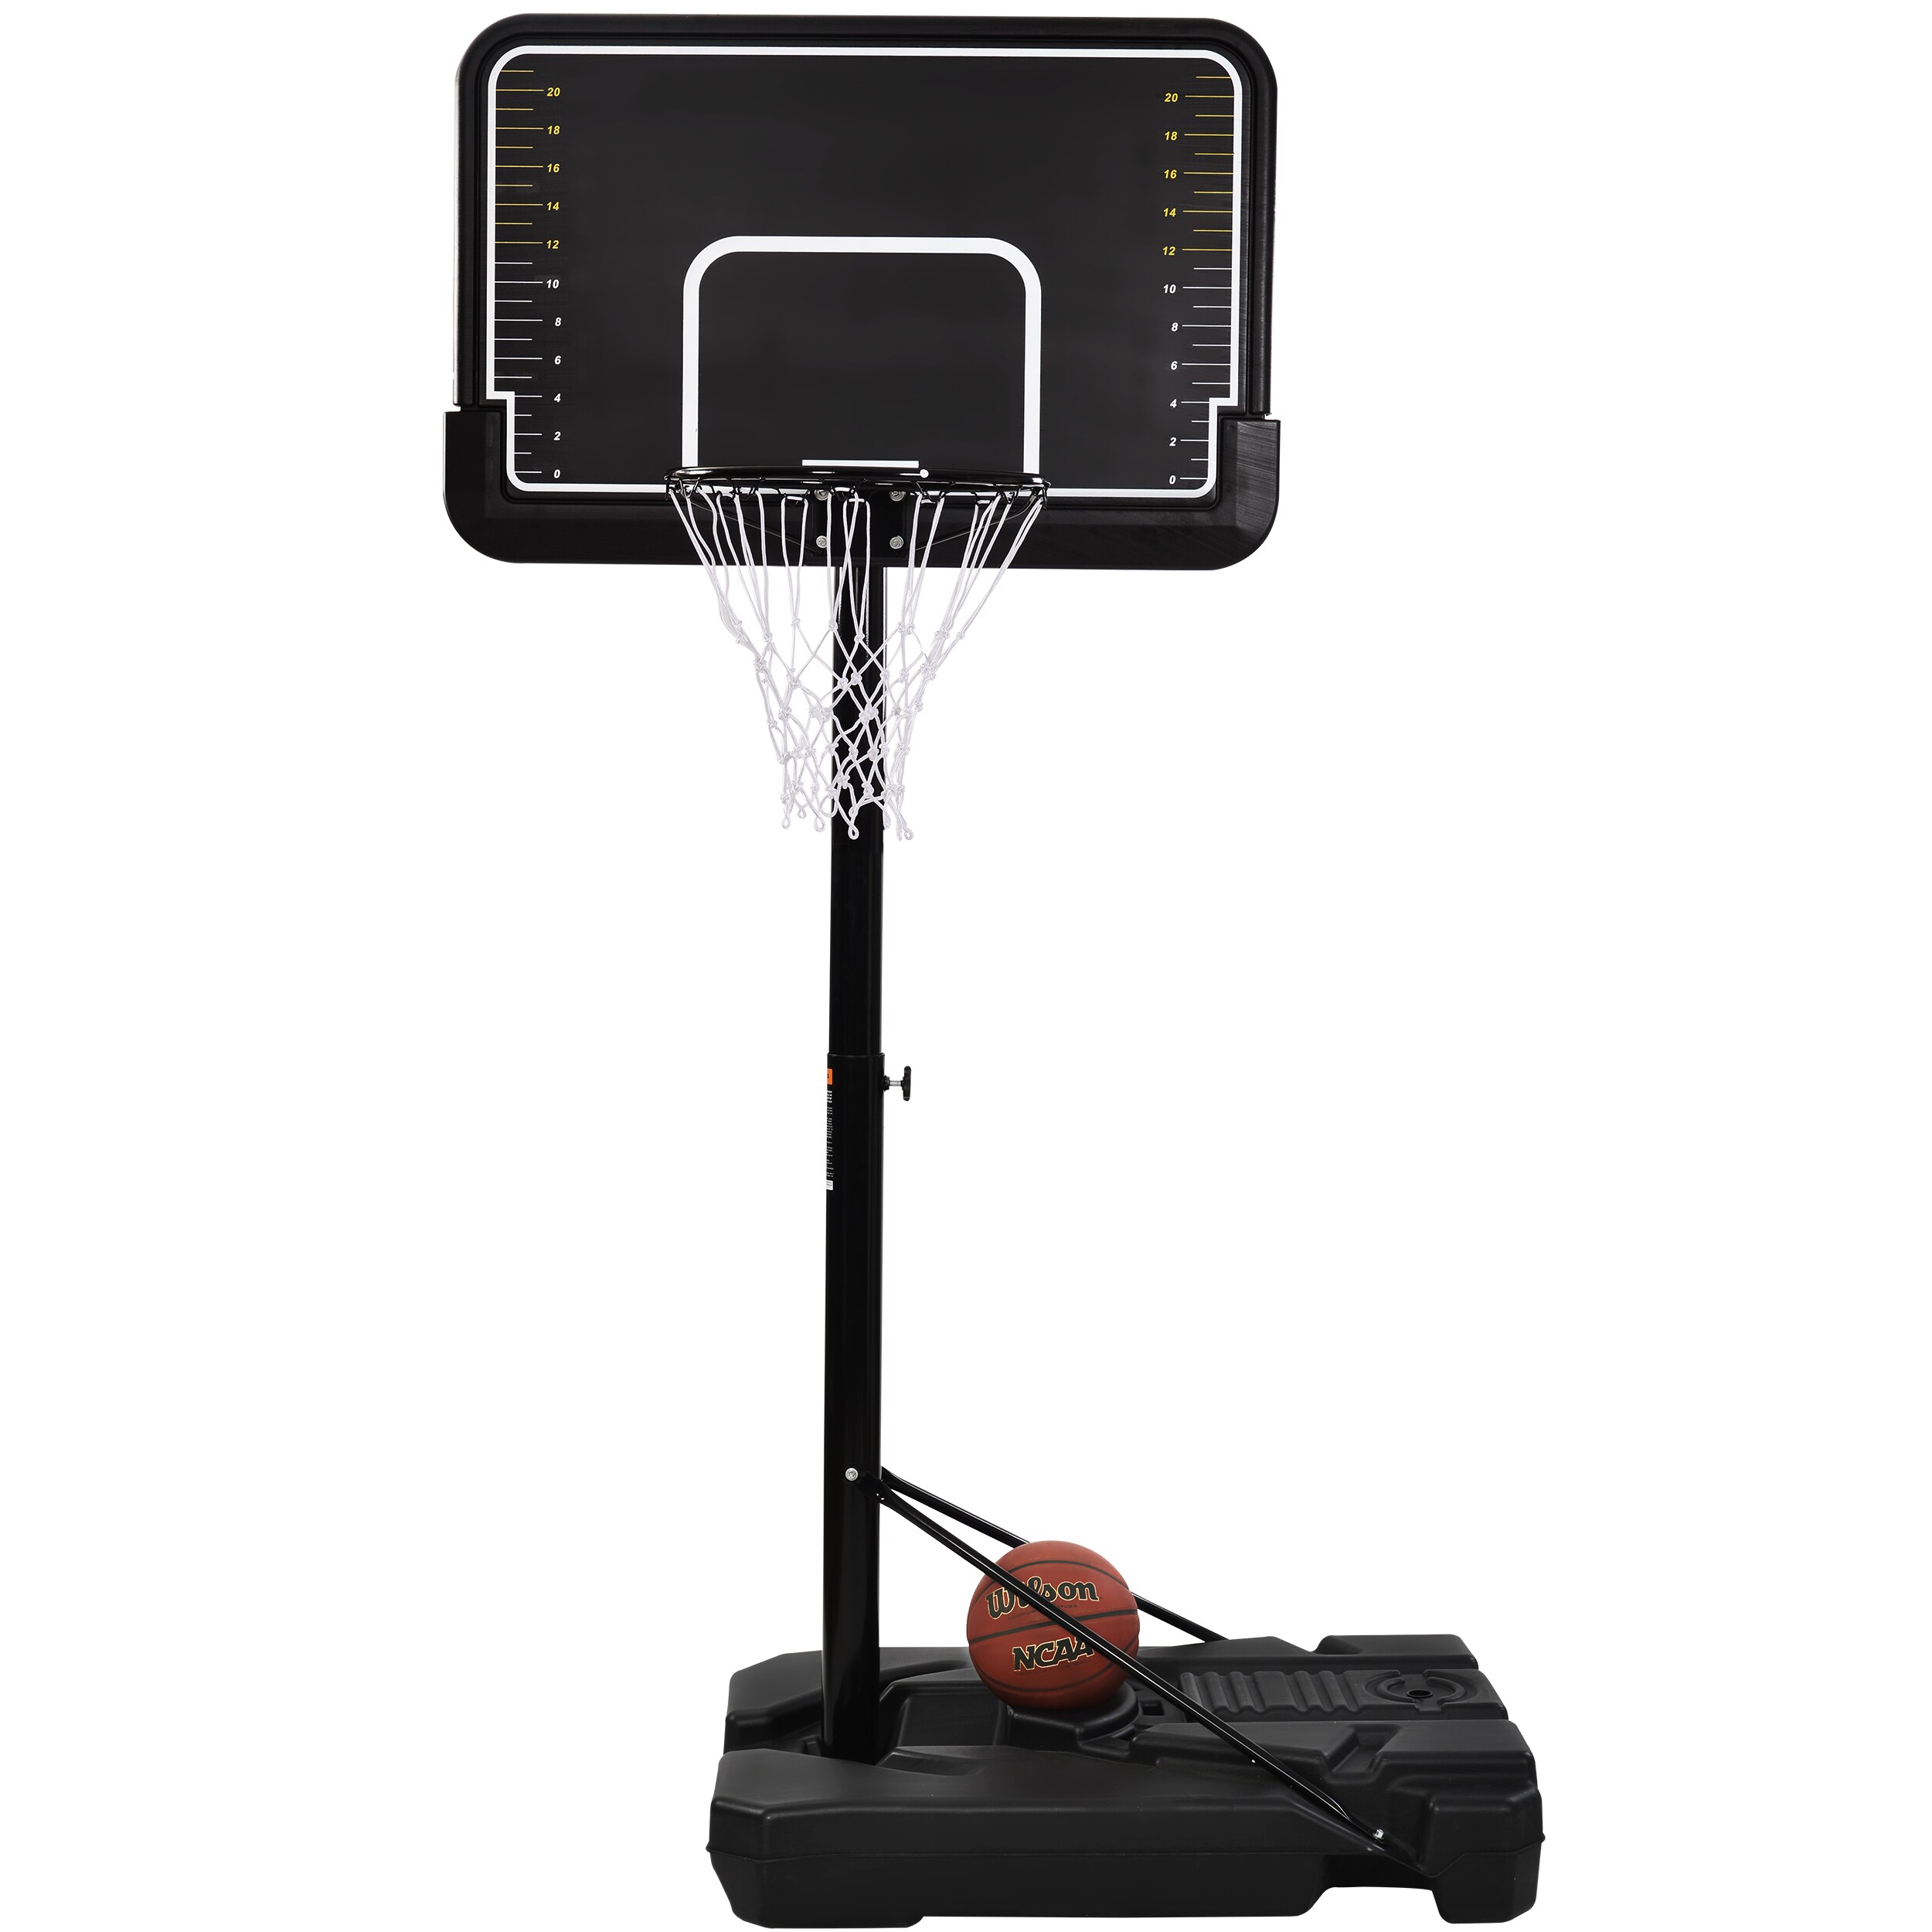 6.6-10ft Height Adjustment Basketball Hoop with Vertical Jump Measurement Recaceik Portable Basketball Hoop Goal System Black Basketball Backboard for Indoor/Outdoor Sports Waterproof 